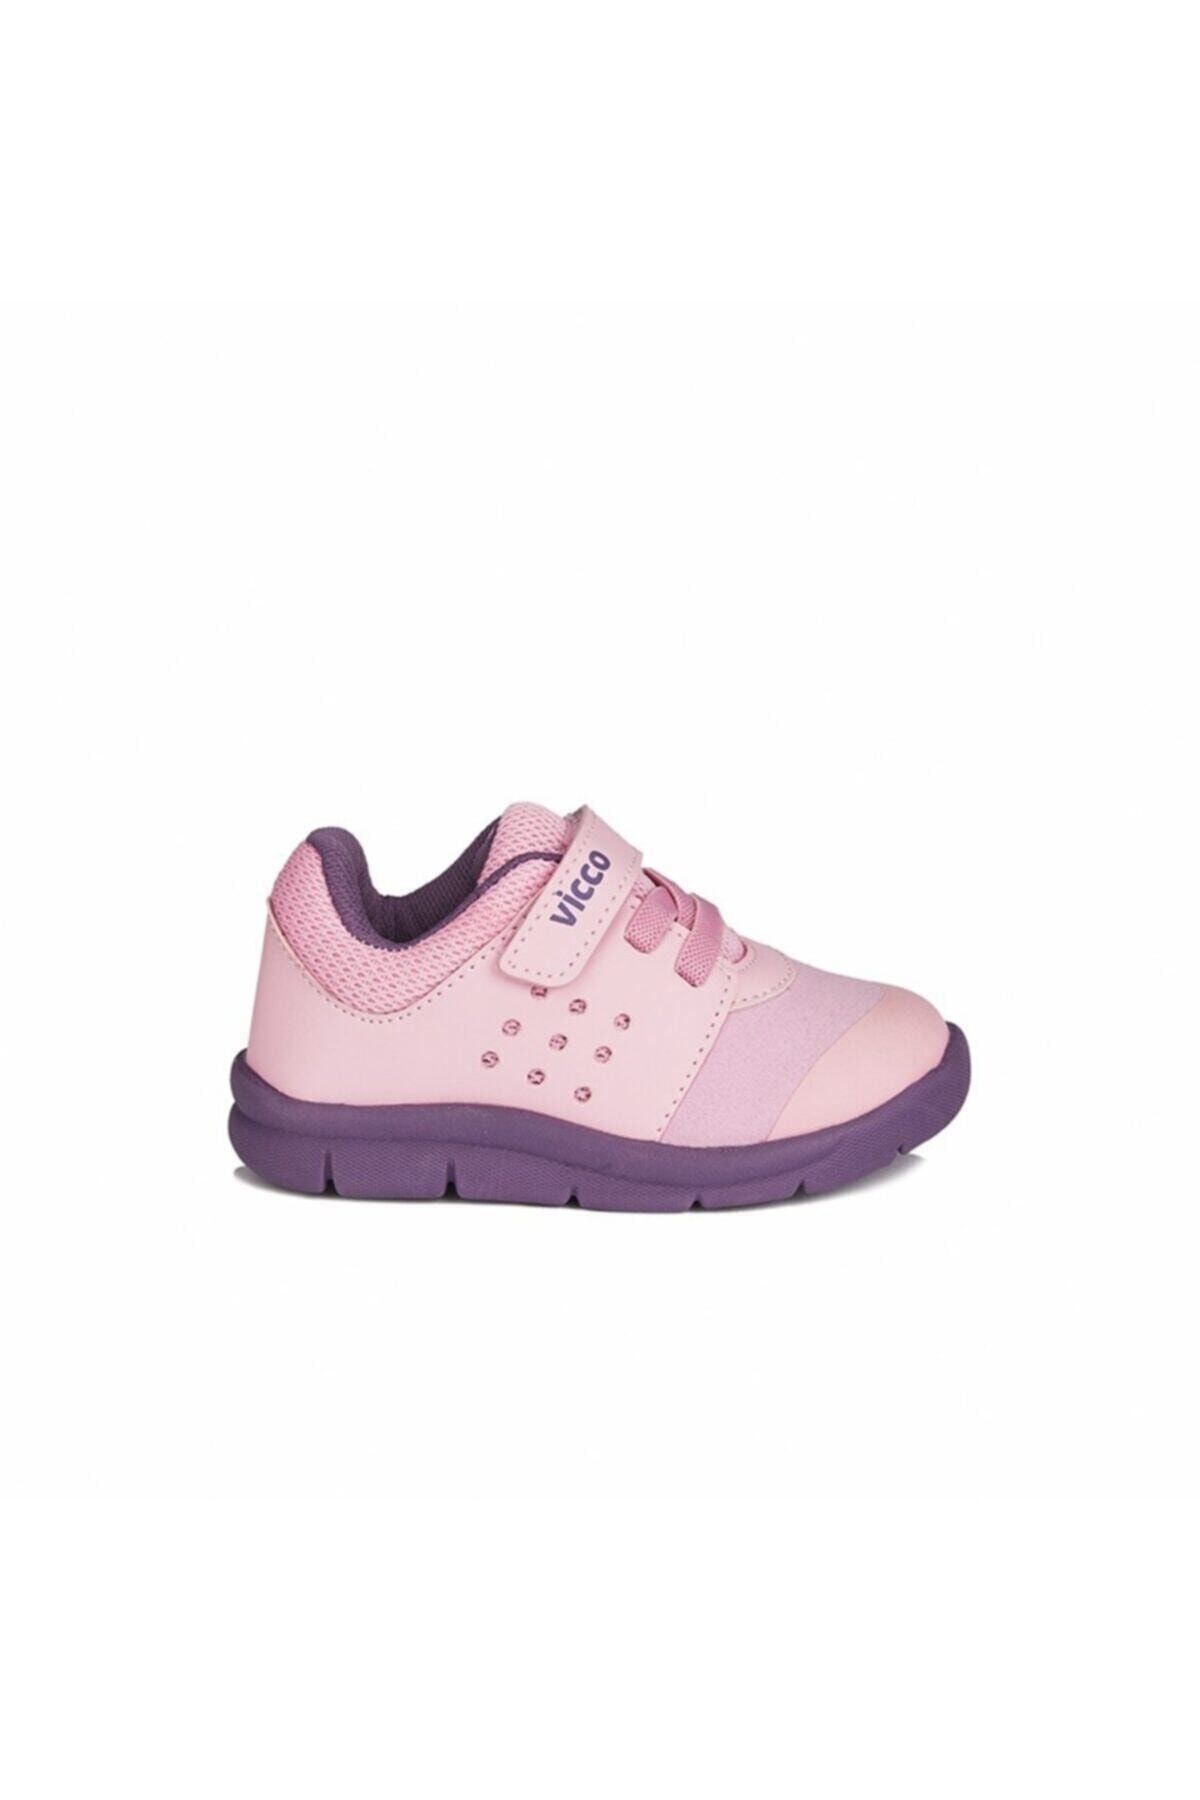 Vicco Kız Çocuk Pembe Ayakkabı 346.e20k.153 Sneaker